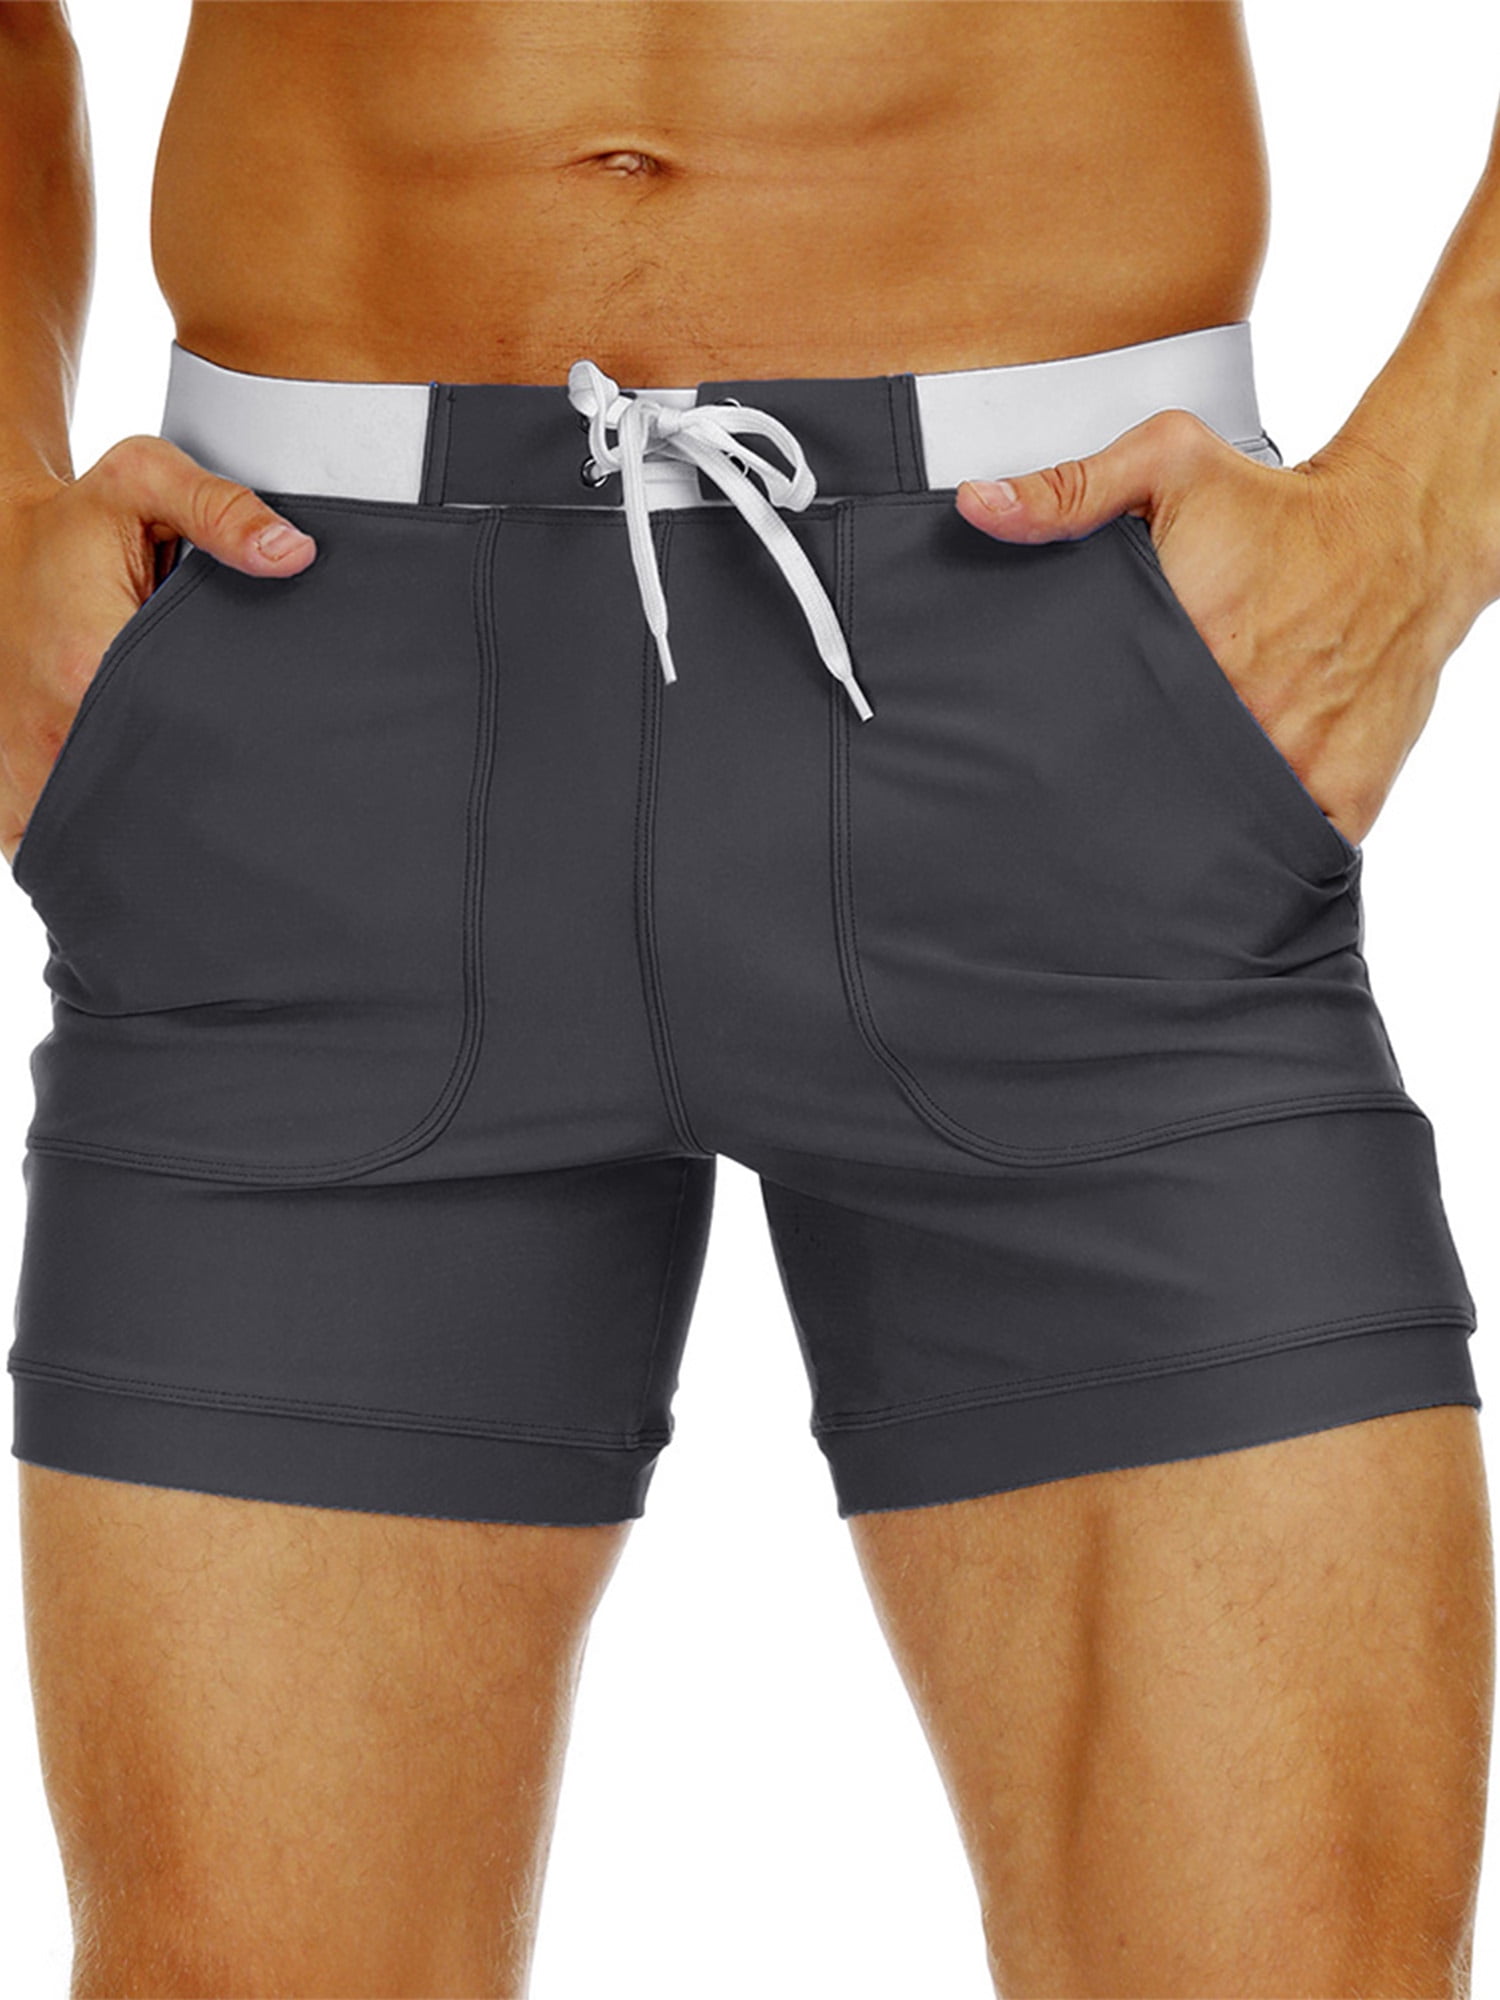 UKAP Mens Swim Trunks Swim Shorts Pants Briefs Boys Board Shorts with ...